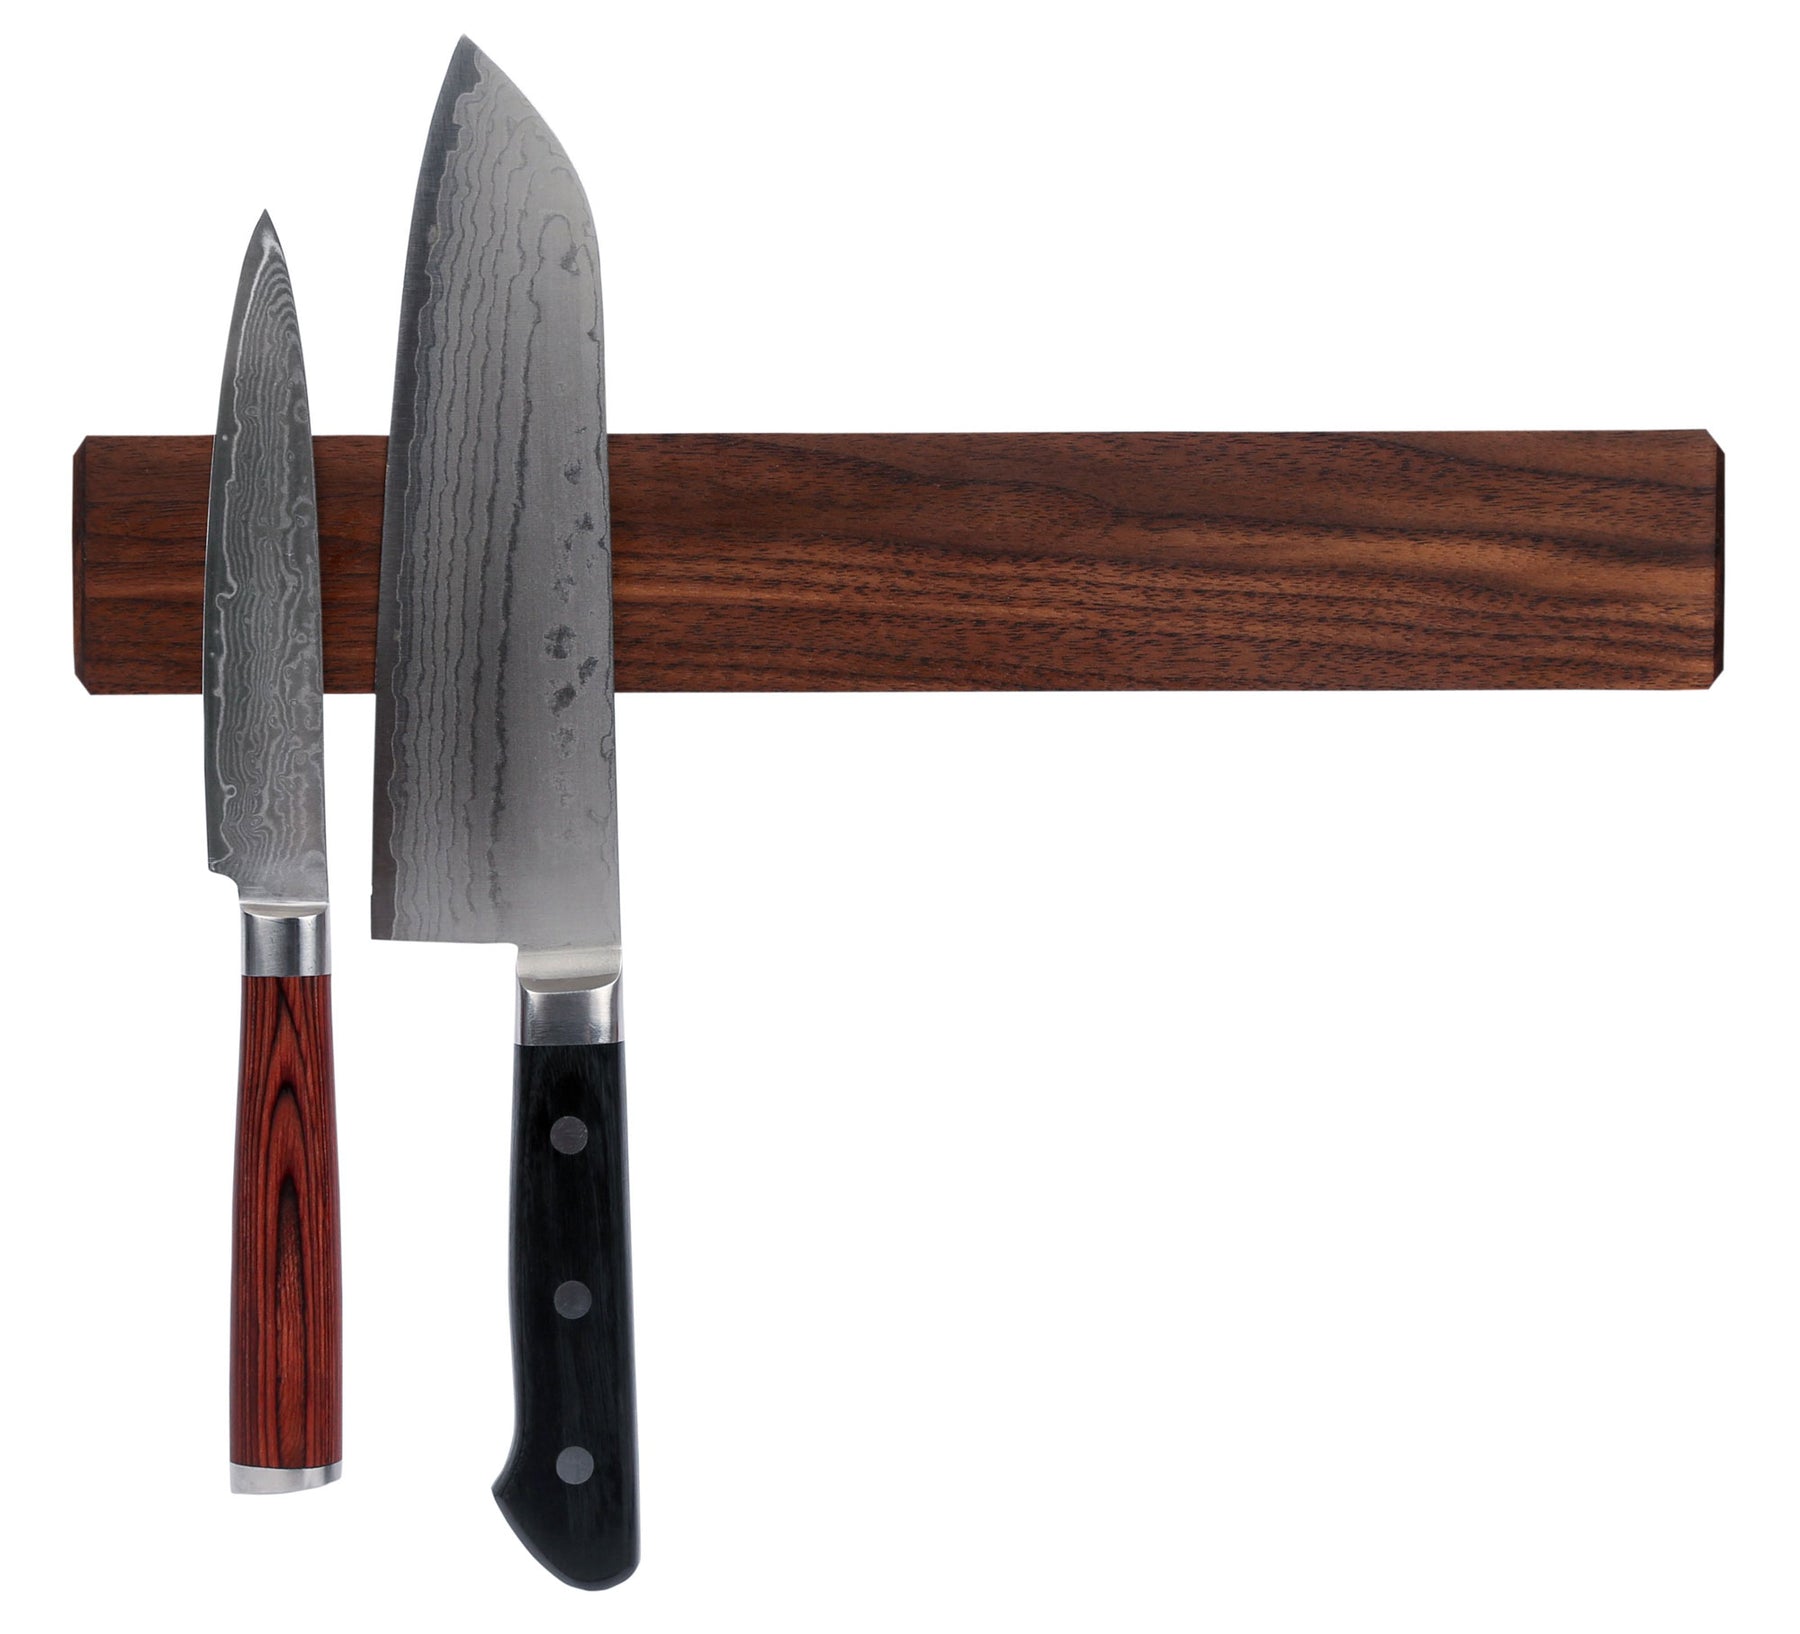  MITSUMOTO SAKARI Kitchen Magnetic Knife Block Holder, Japanese  Acacia Wood Storage Knife Tool Holder, Enhanced Double-Sided Magnetic Strip  Wooden Knife Holder: Home & Kitchen